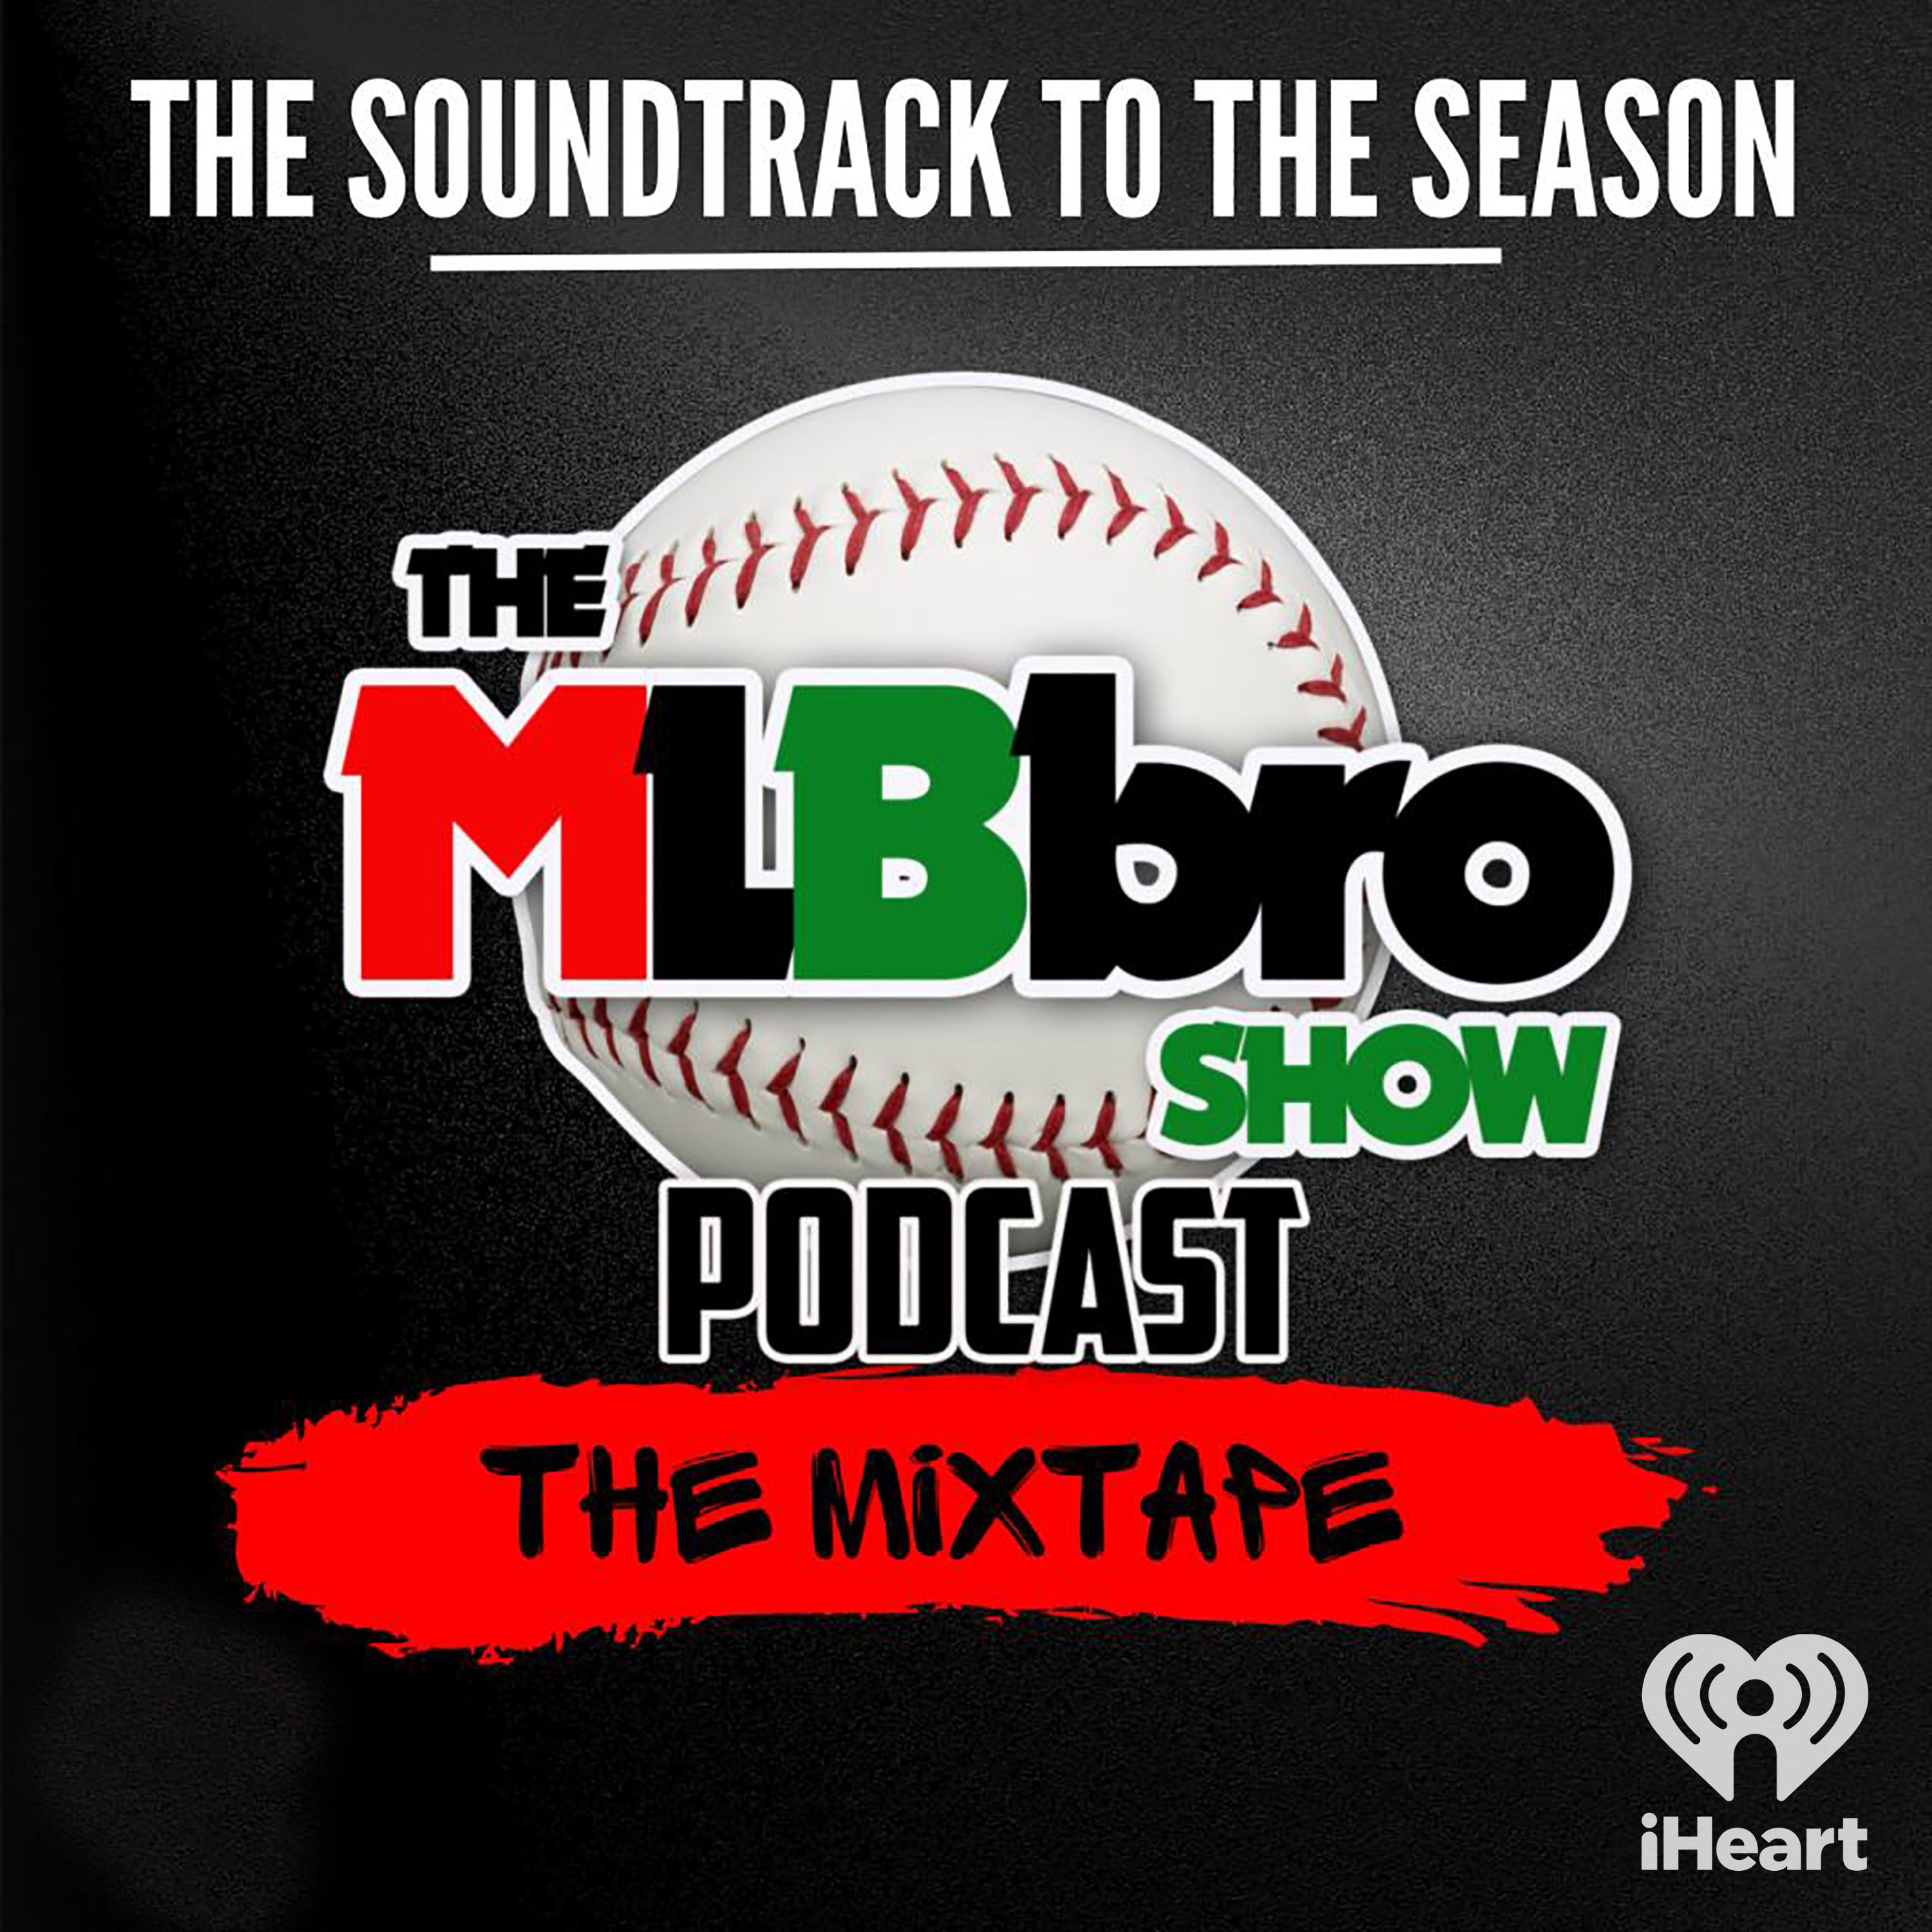 MLBbro Show Podcast The Mixtape Vol 3 Episode 24